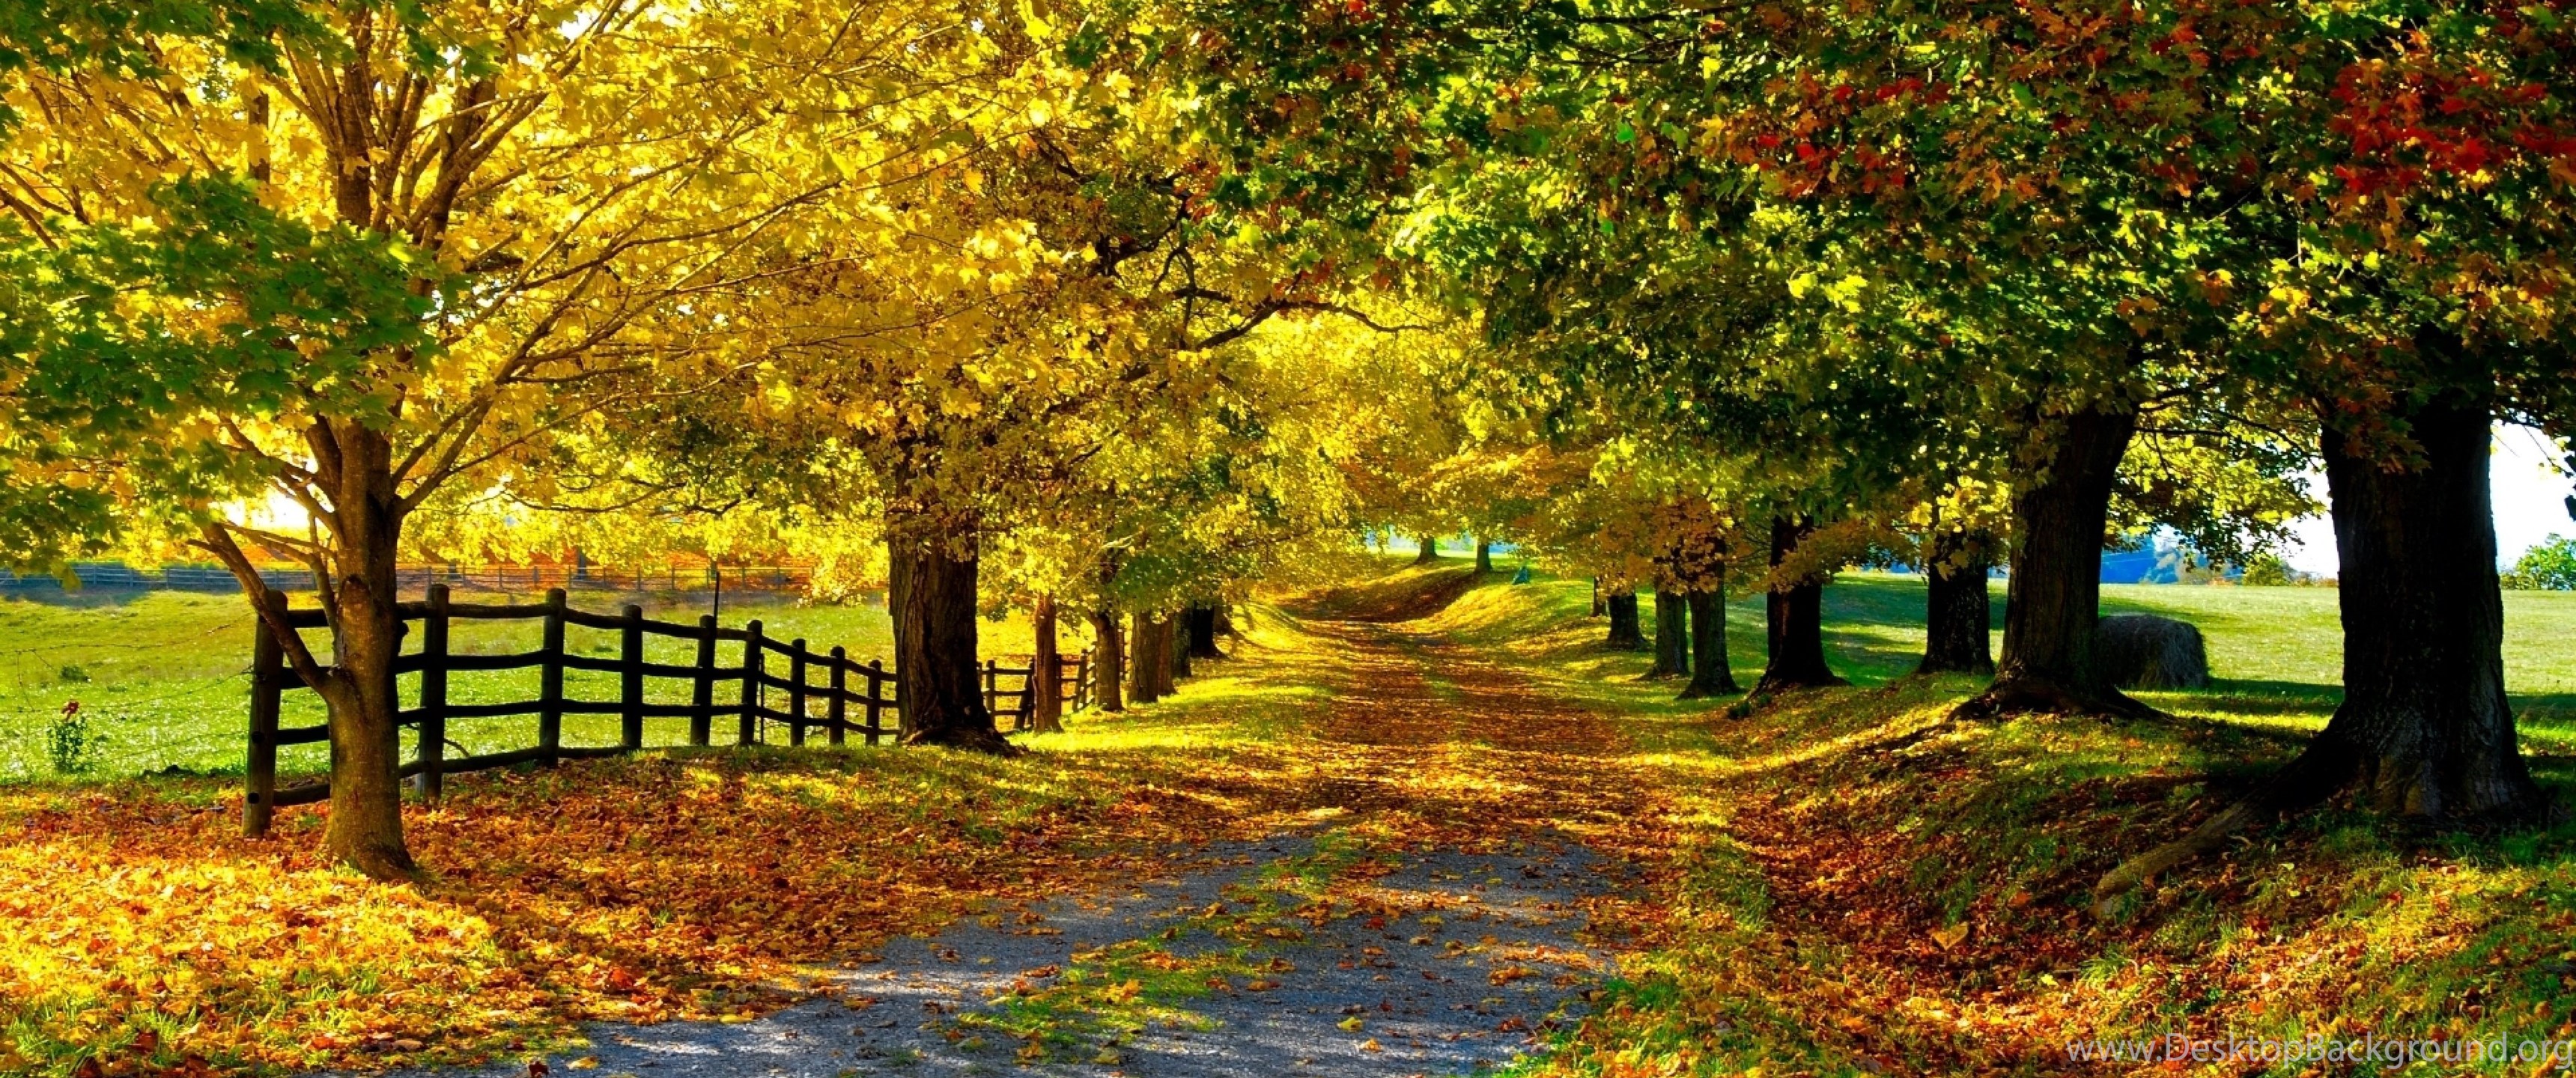 Download Autumn Leaves Wallpaper Photo Desktop Background